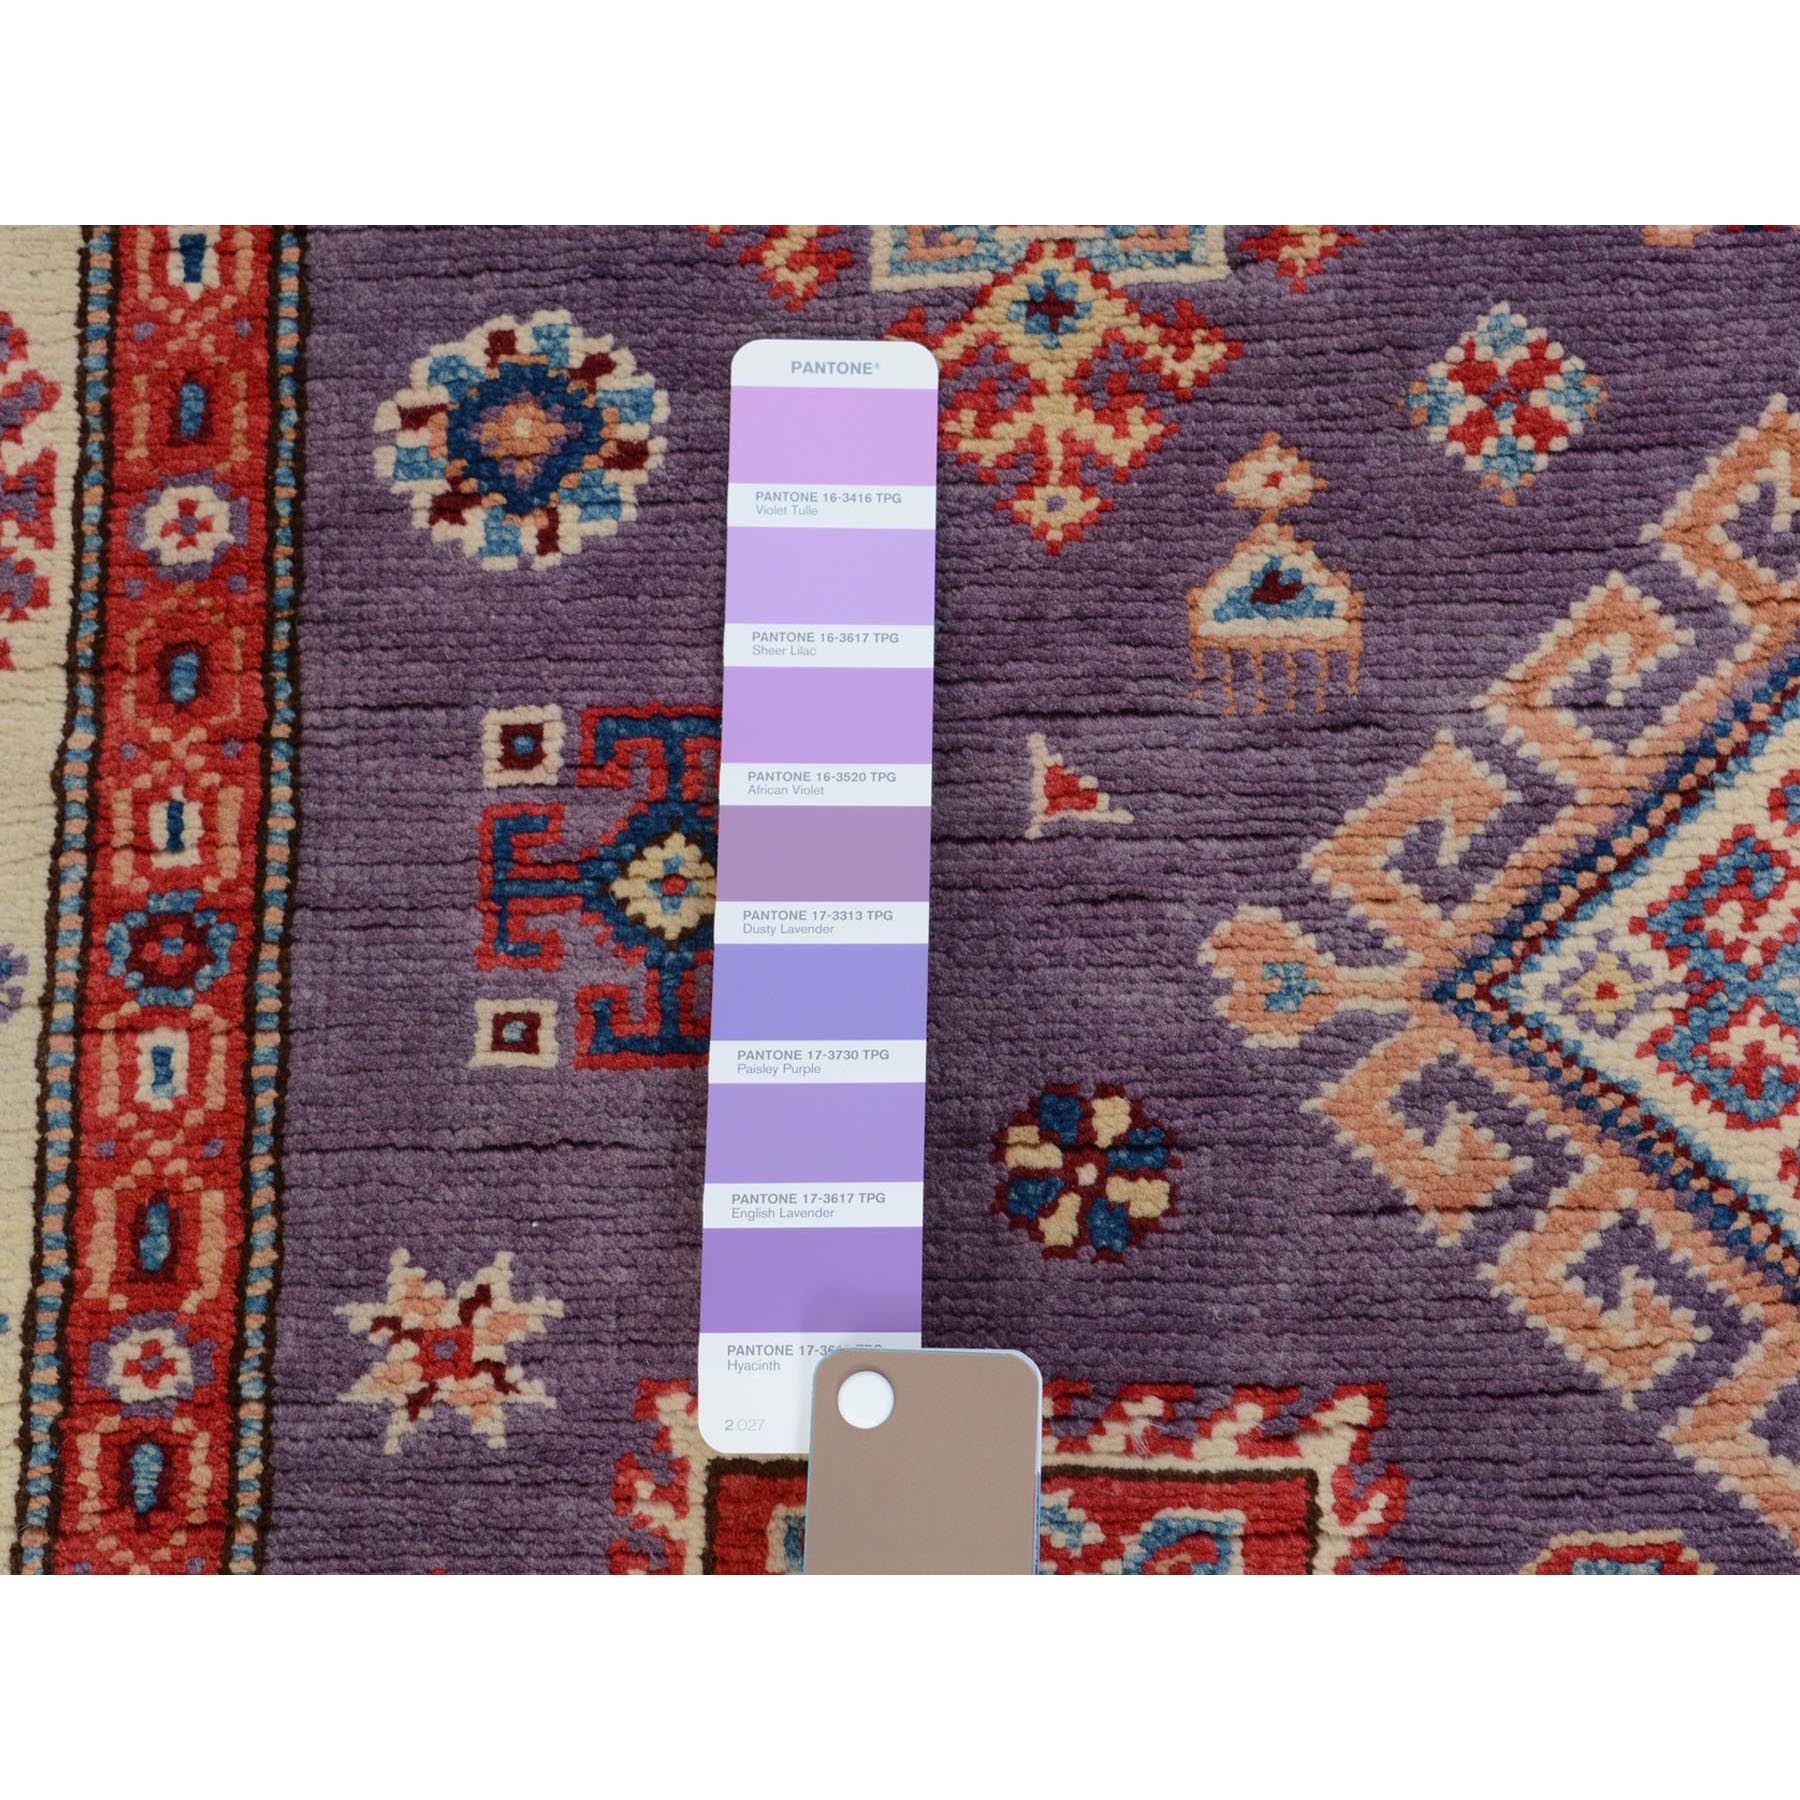 4-x5-8  Purple Special Kazak Geometric Design Pure Wool Hand Knotted Oriental Rug 